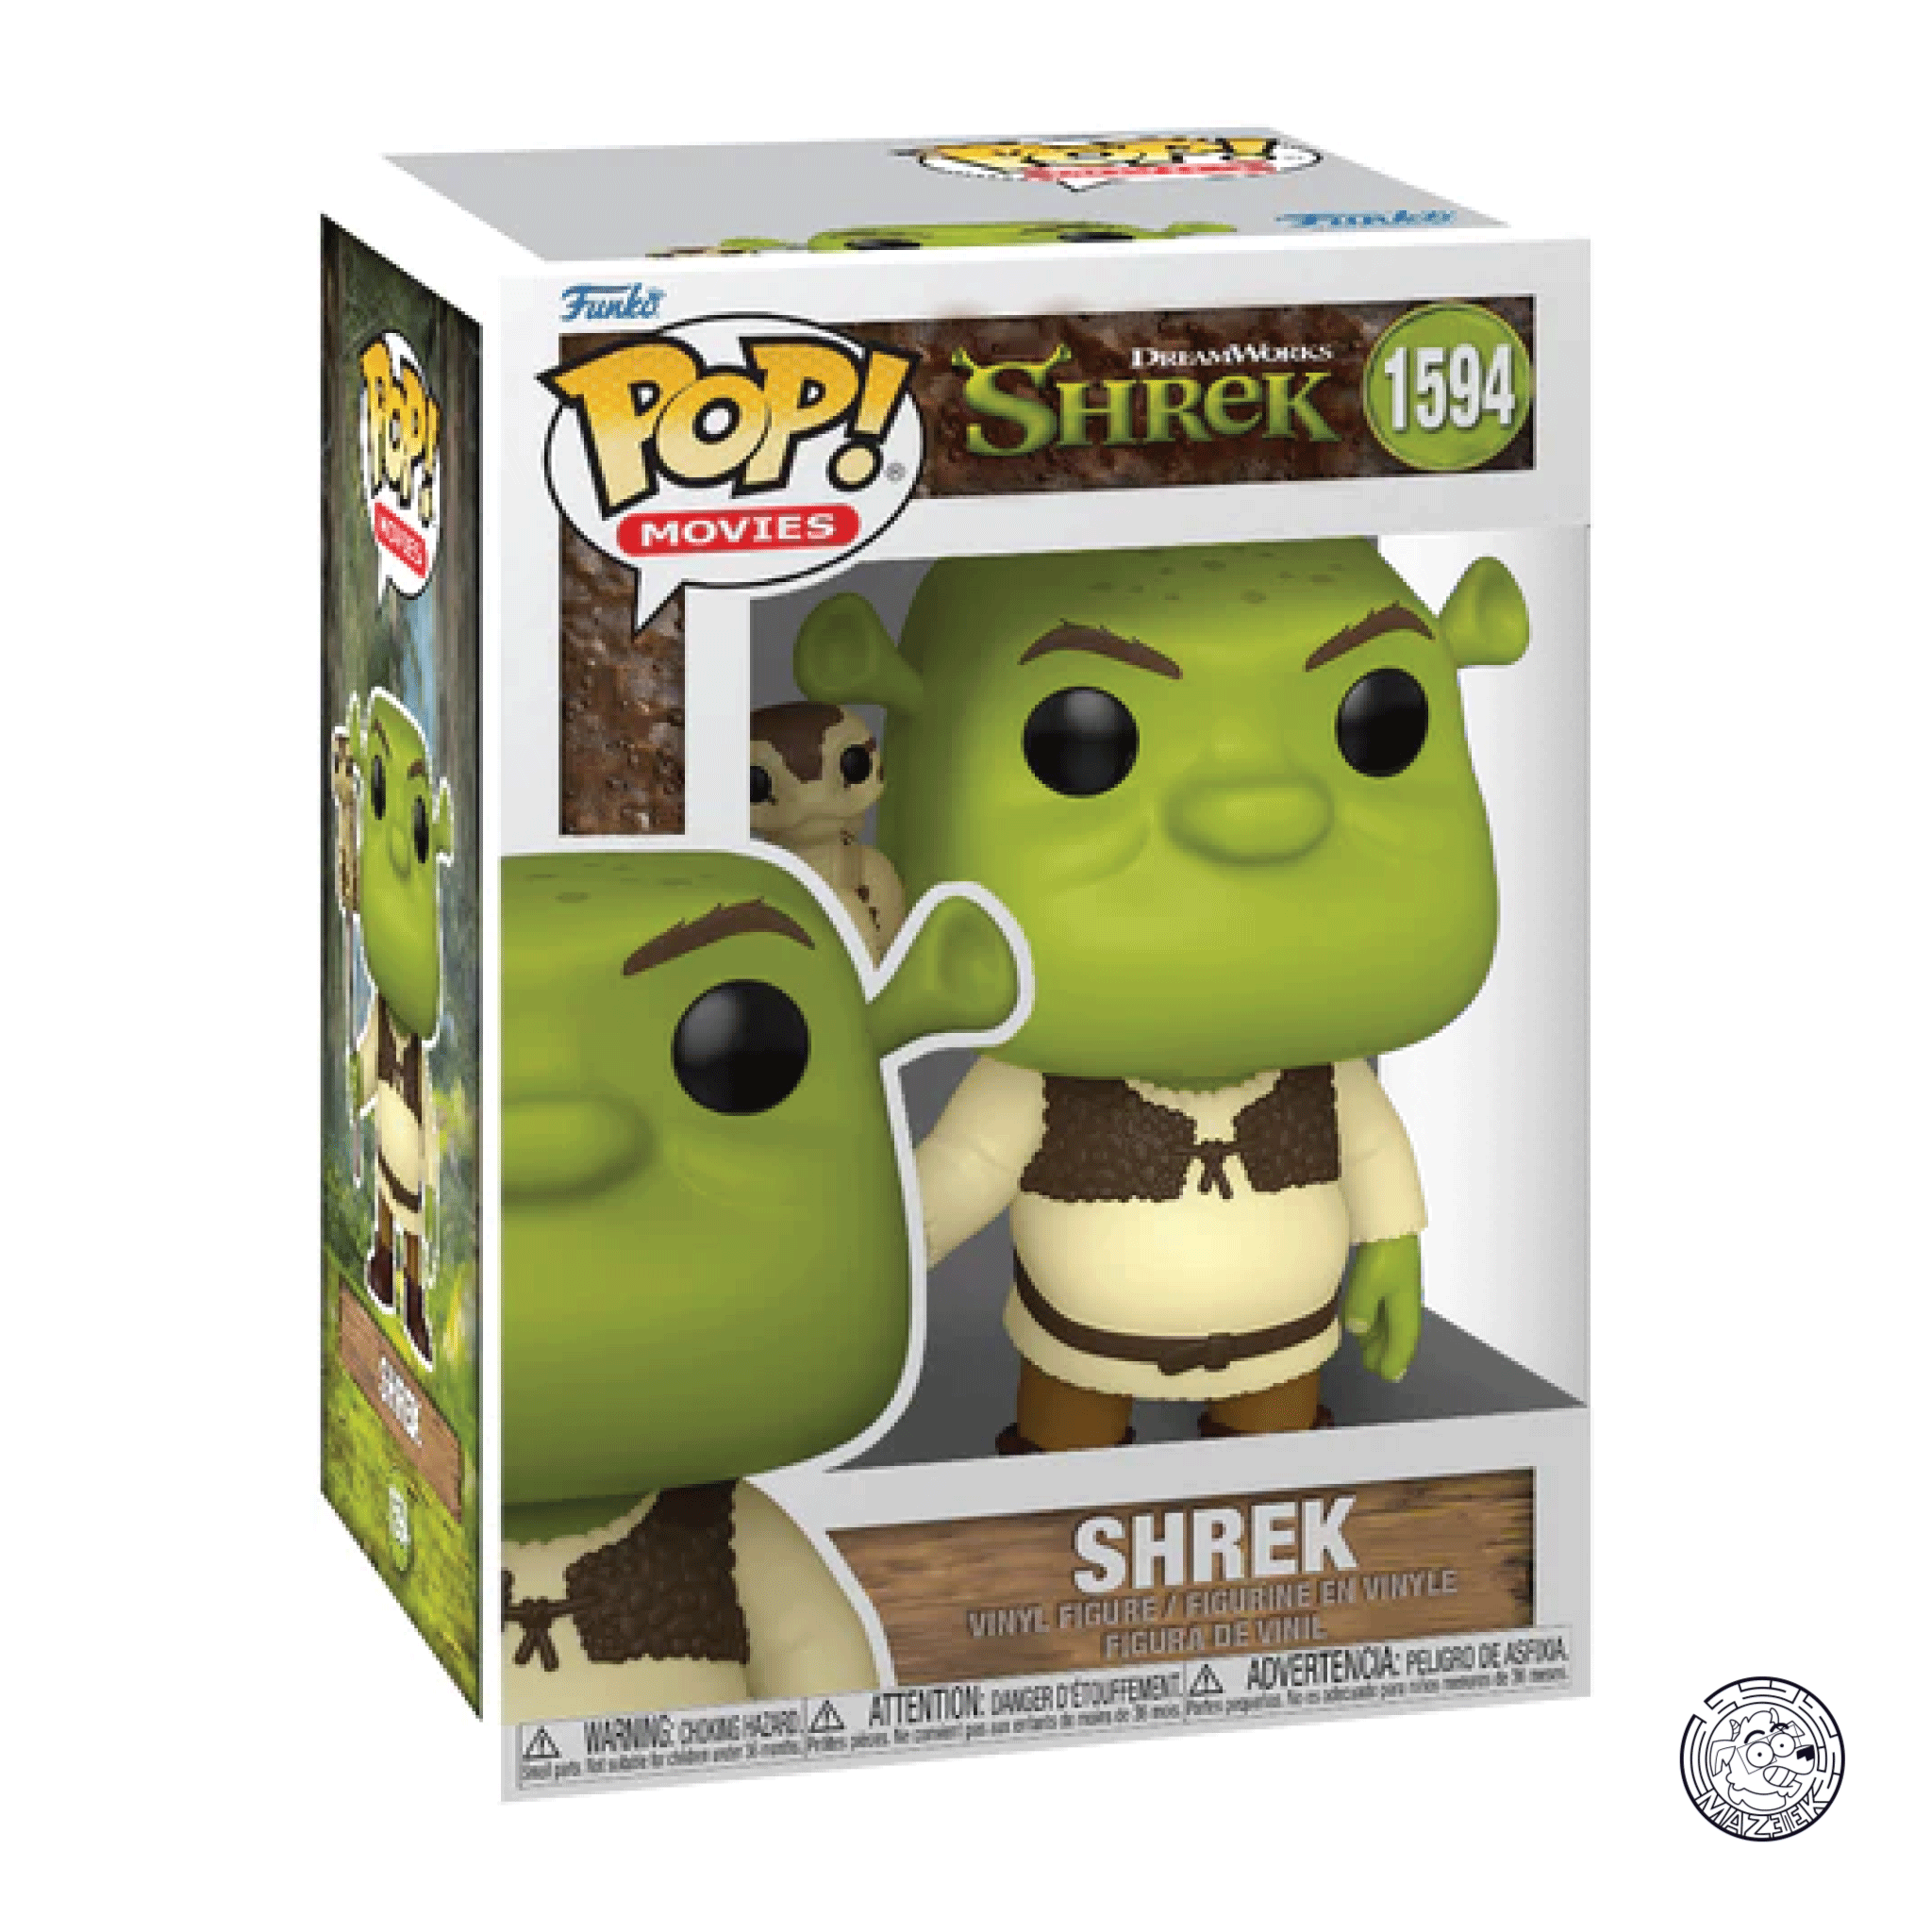 Funko POP! Shrek: Shrek 1594